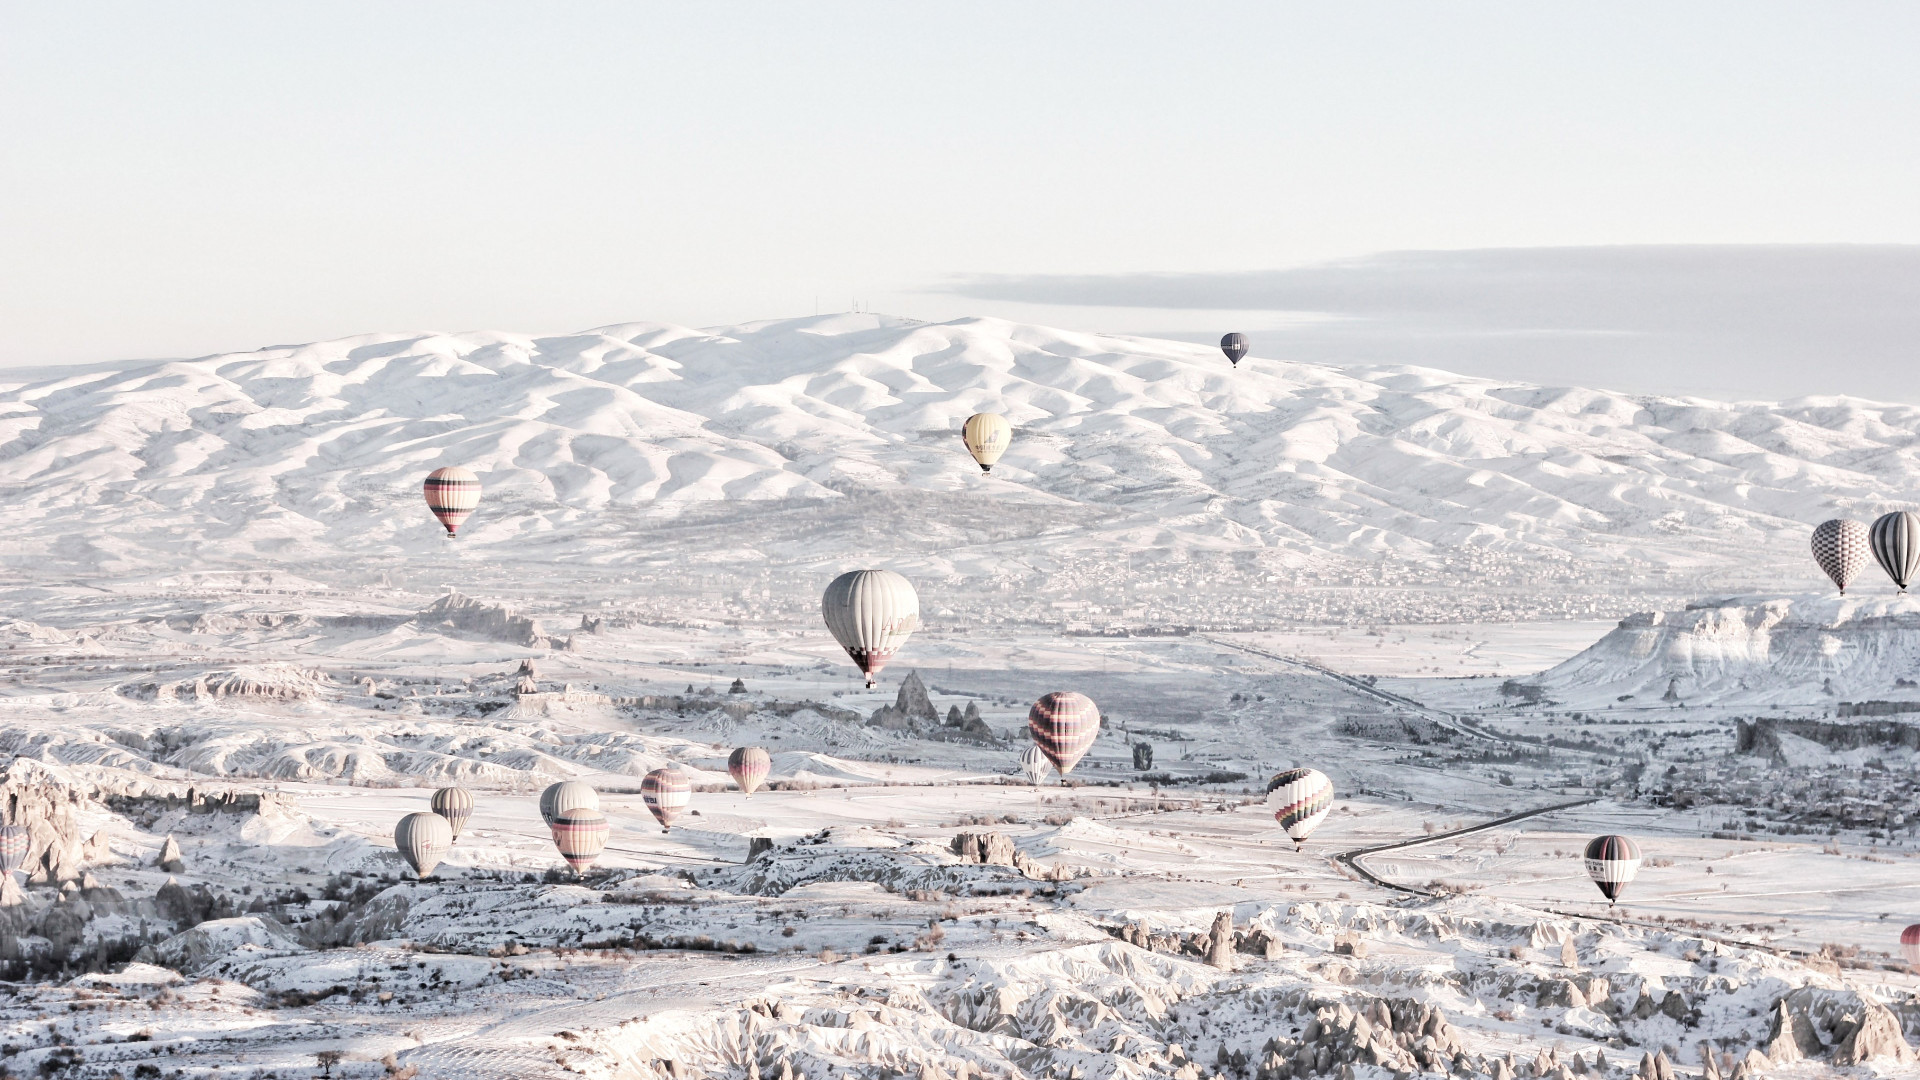 Hot air balloons in Winter landscape wallpaper 1920x1080